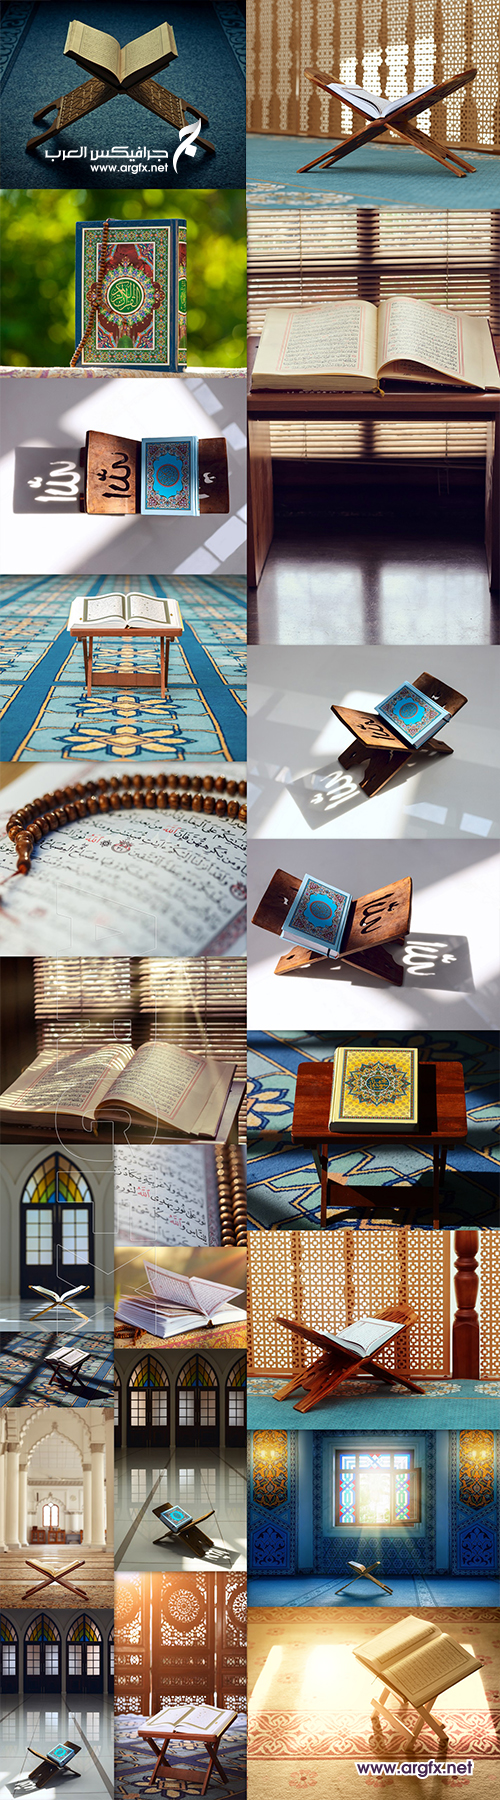 Quran - holy book of Islam